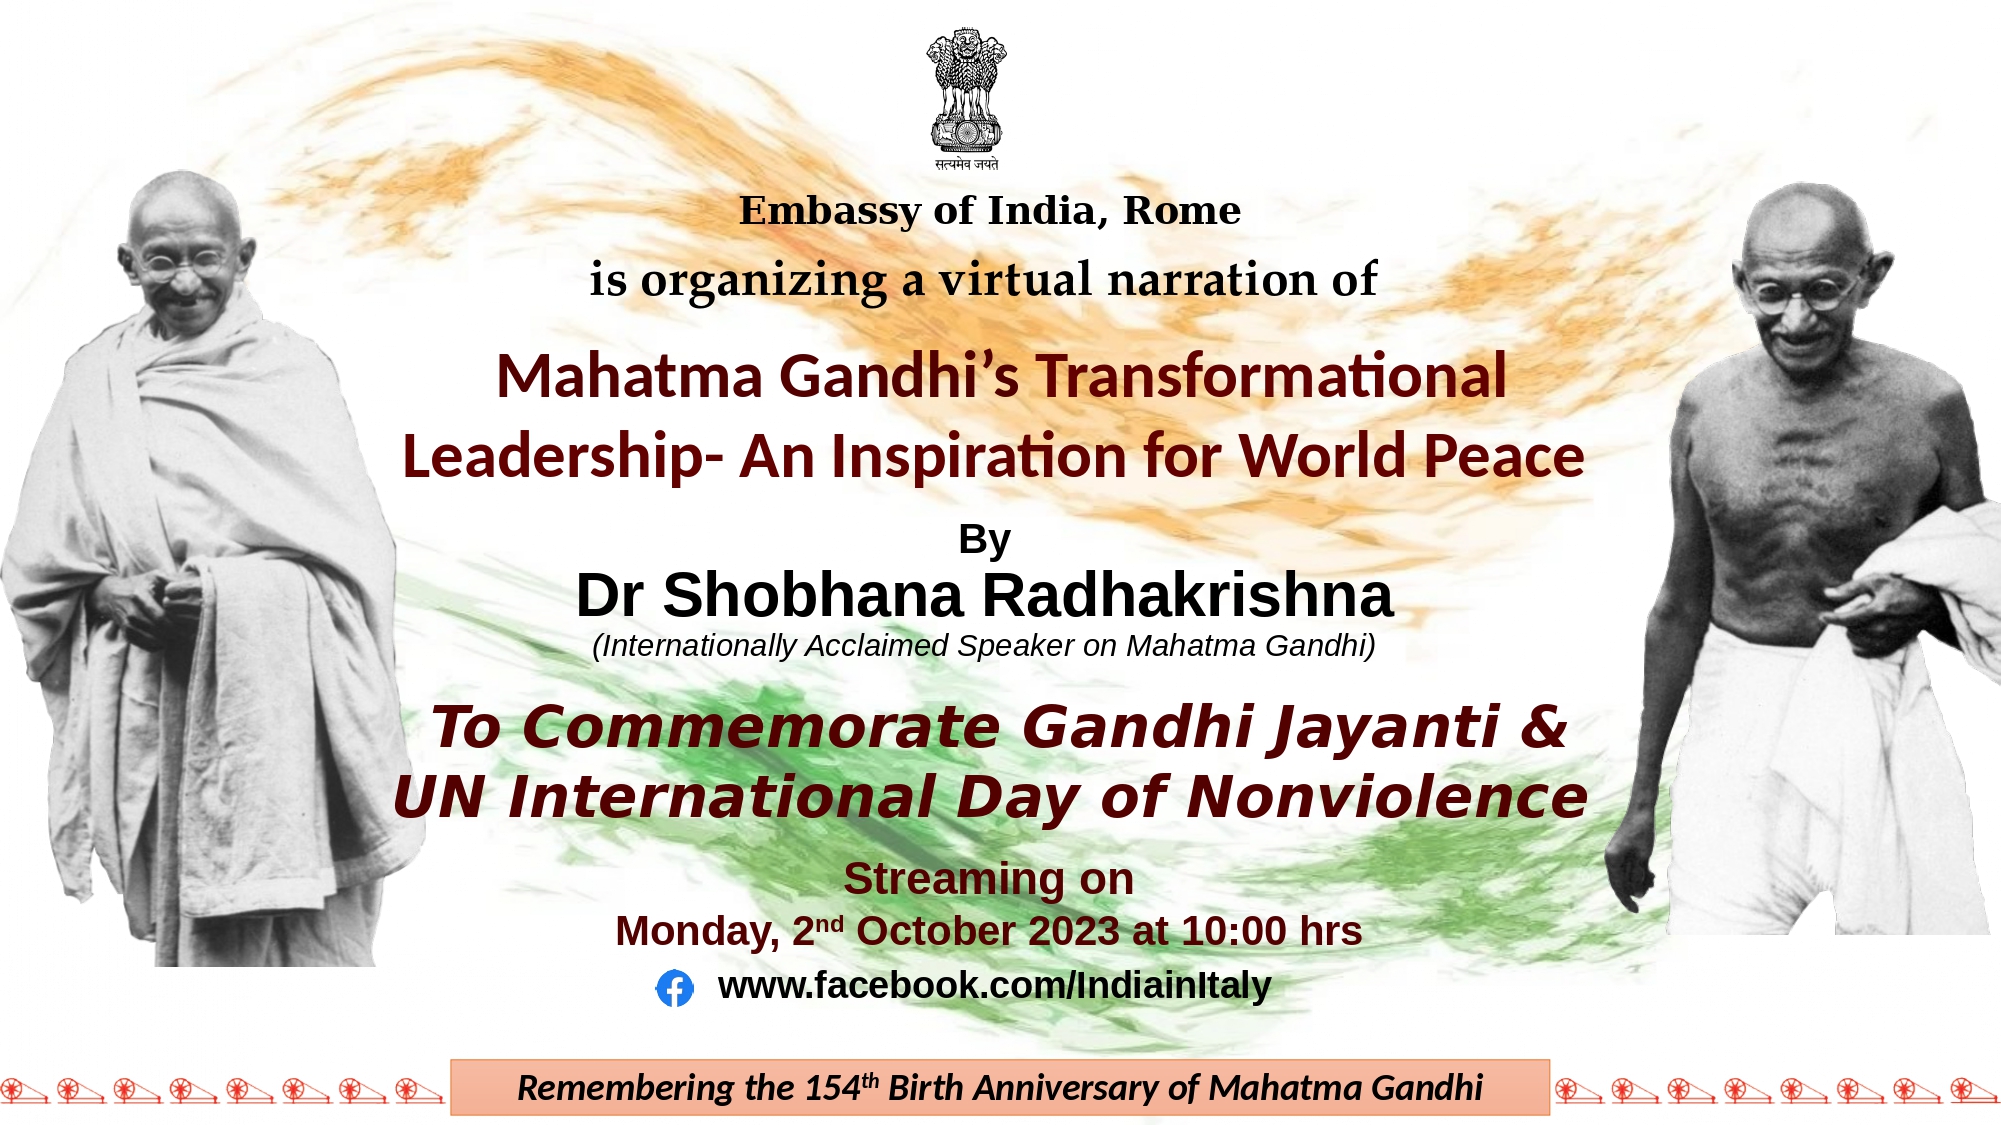 "A virtual narration of Mahatma Gandhi’s Transformational Leadership- An Inspiration for World Peace"  by Dr. Shobhana Radhakrishna (online- 2 ottobre 2023) 